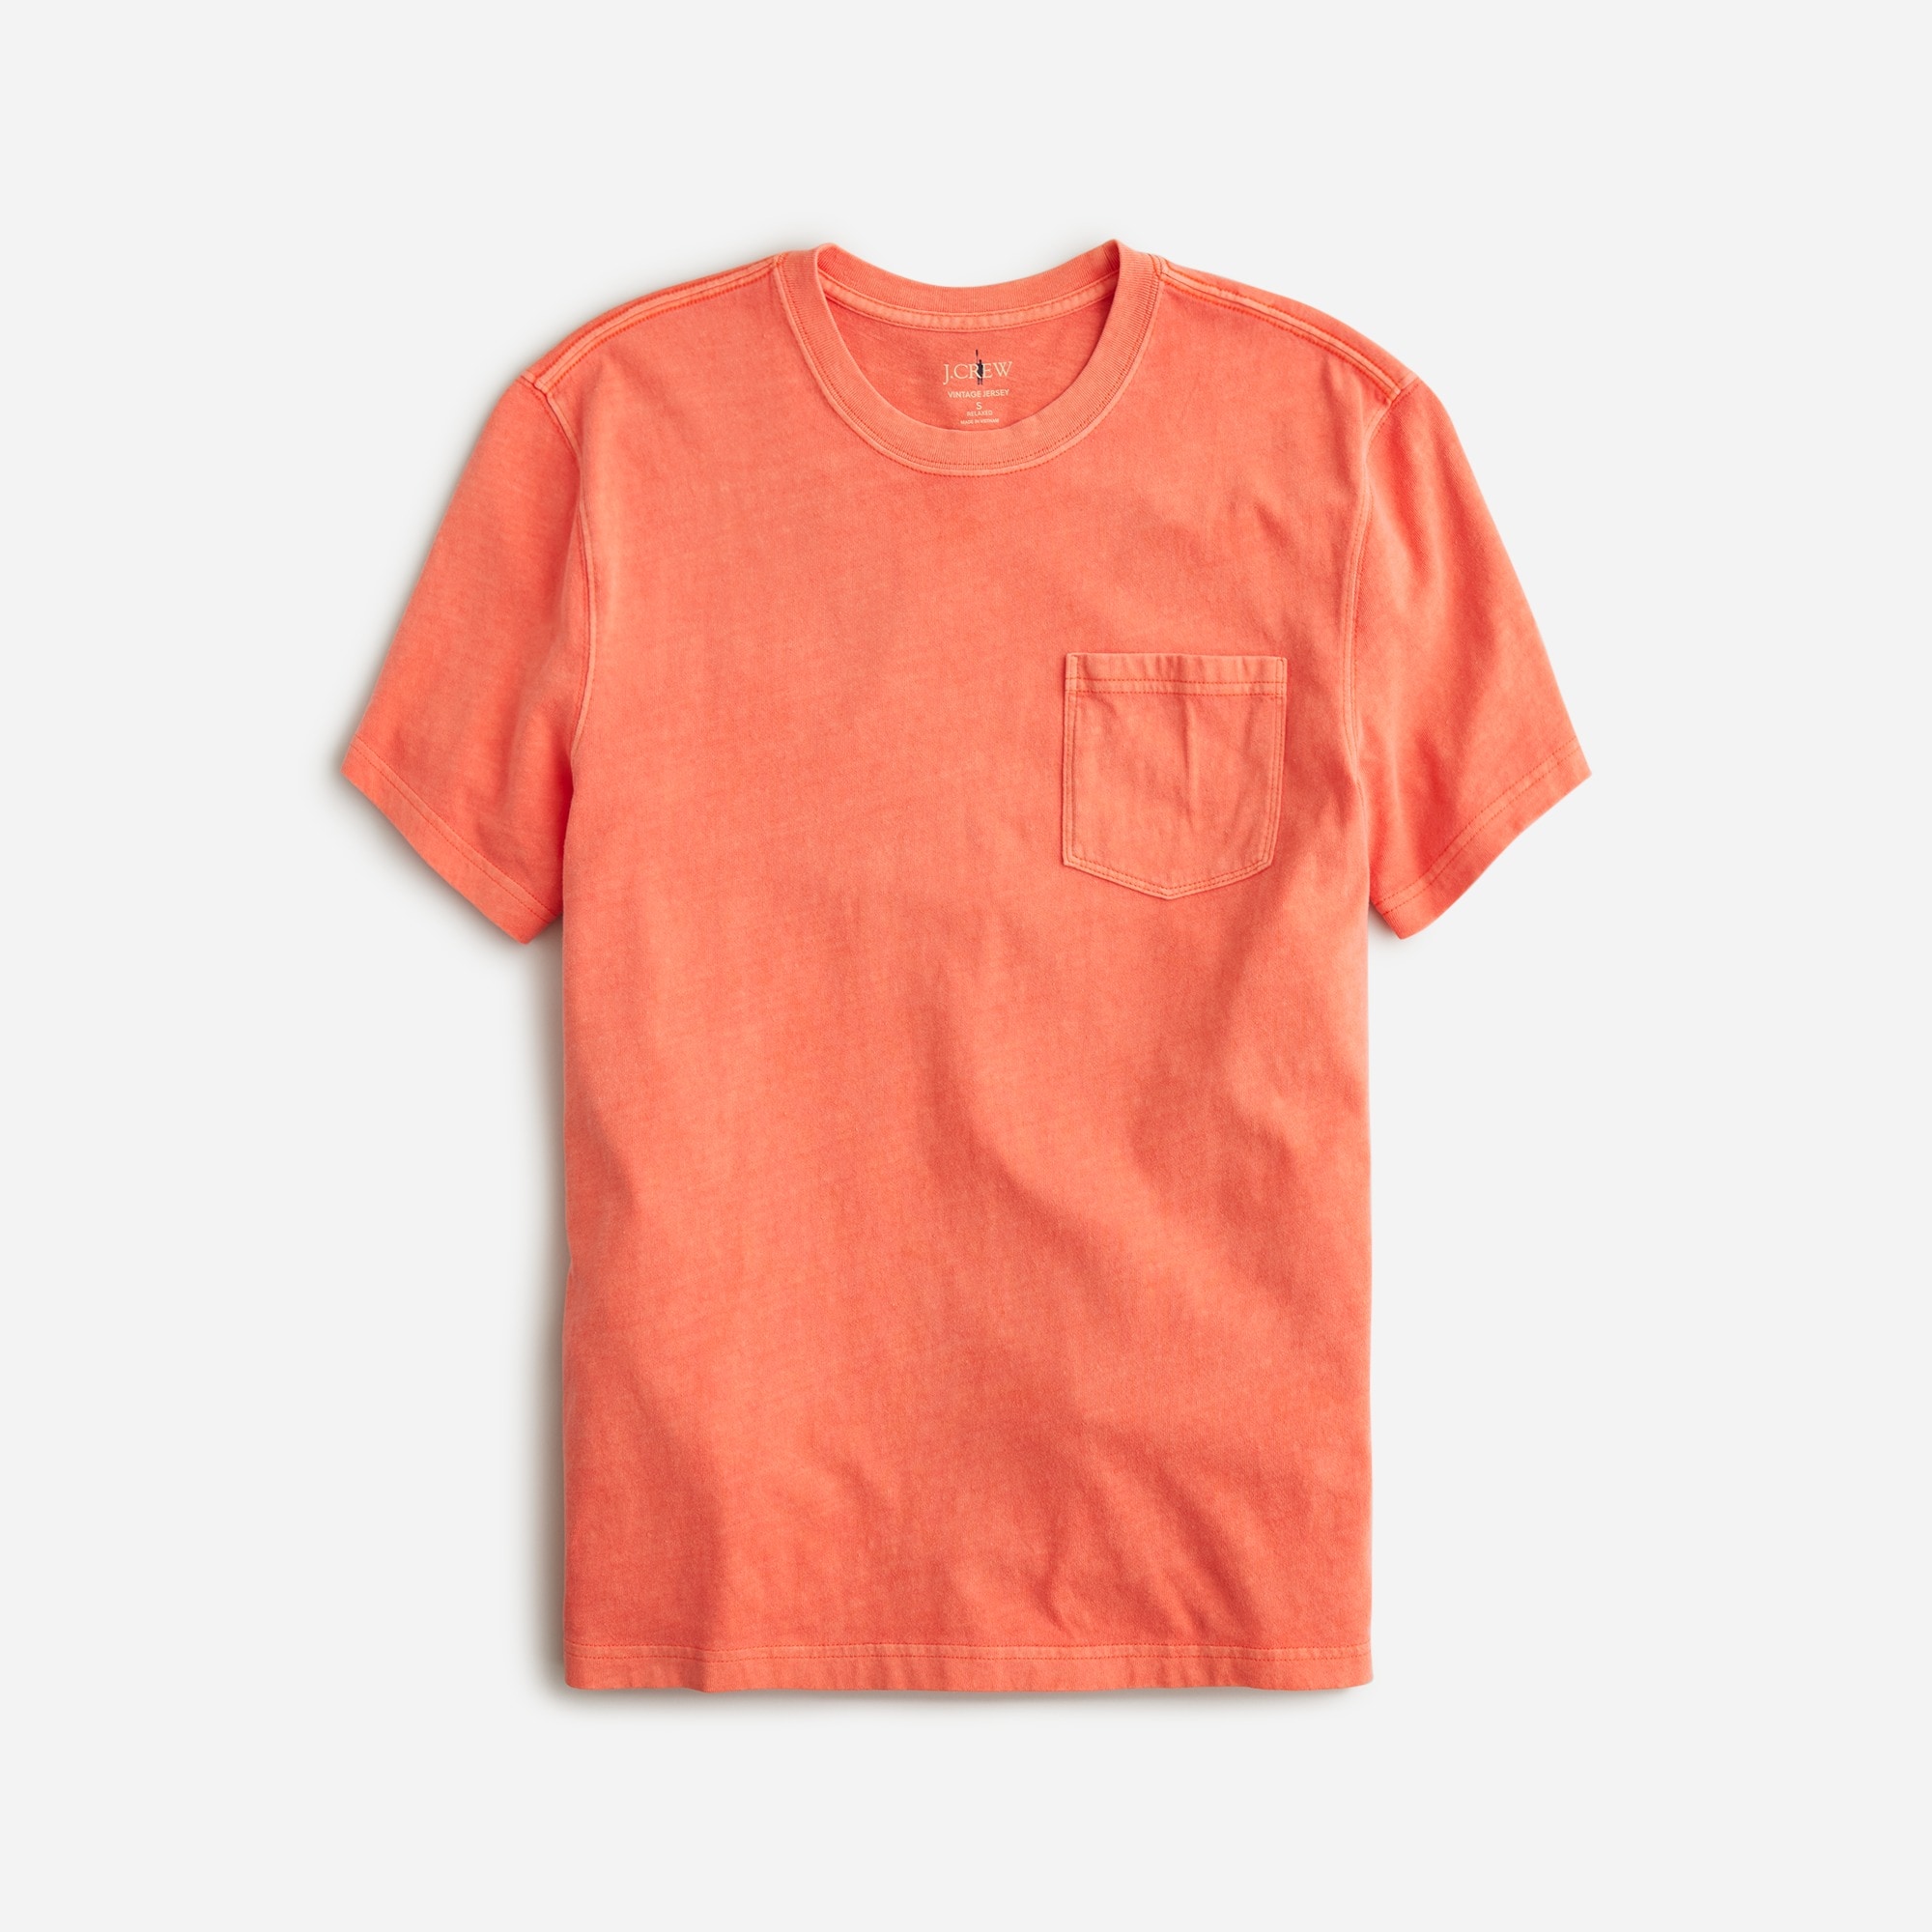 Jcrew Vintage-wash cotton pocket T-shirt